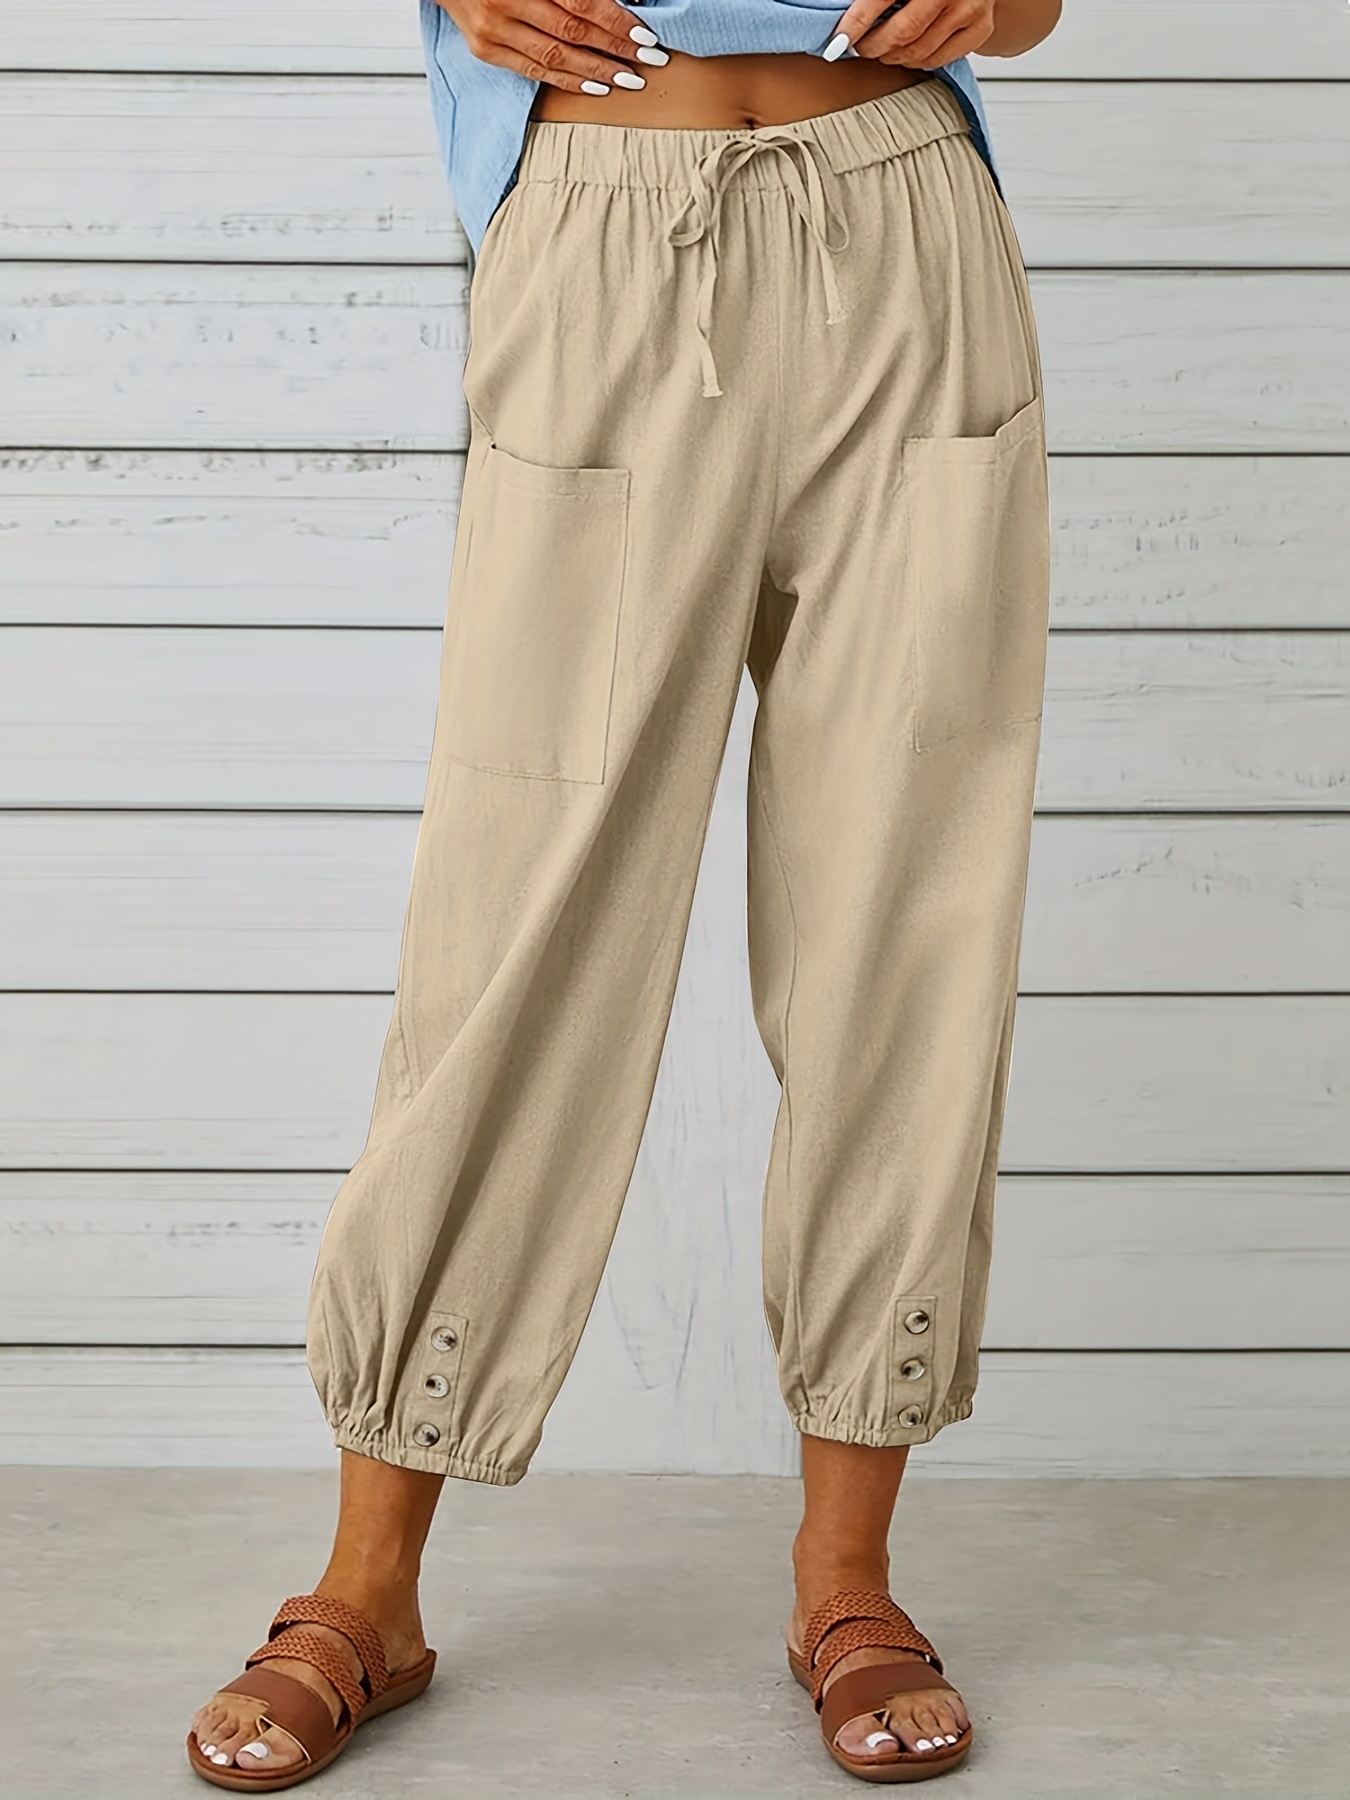 Women's Pants Loose Solid Elastic Waist Pocket Harem Pants Cotton Linen  Vintage Boho Beach Trousers High Waist Haren Pants Women